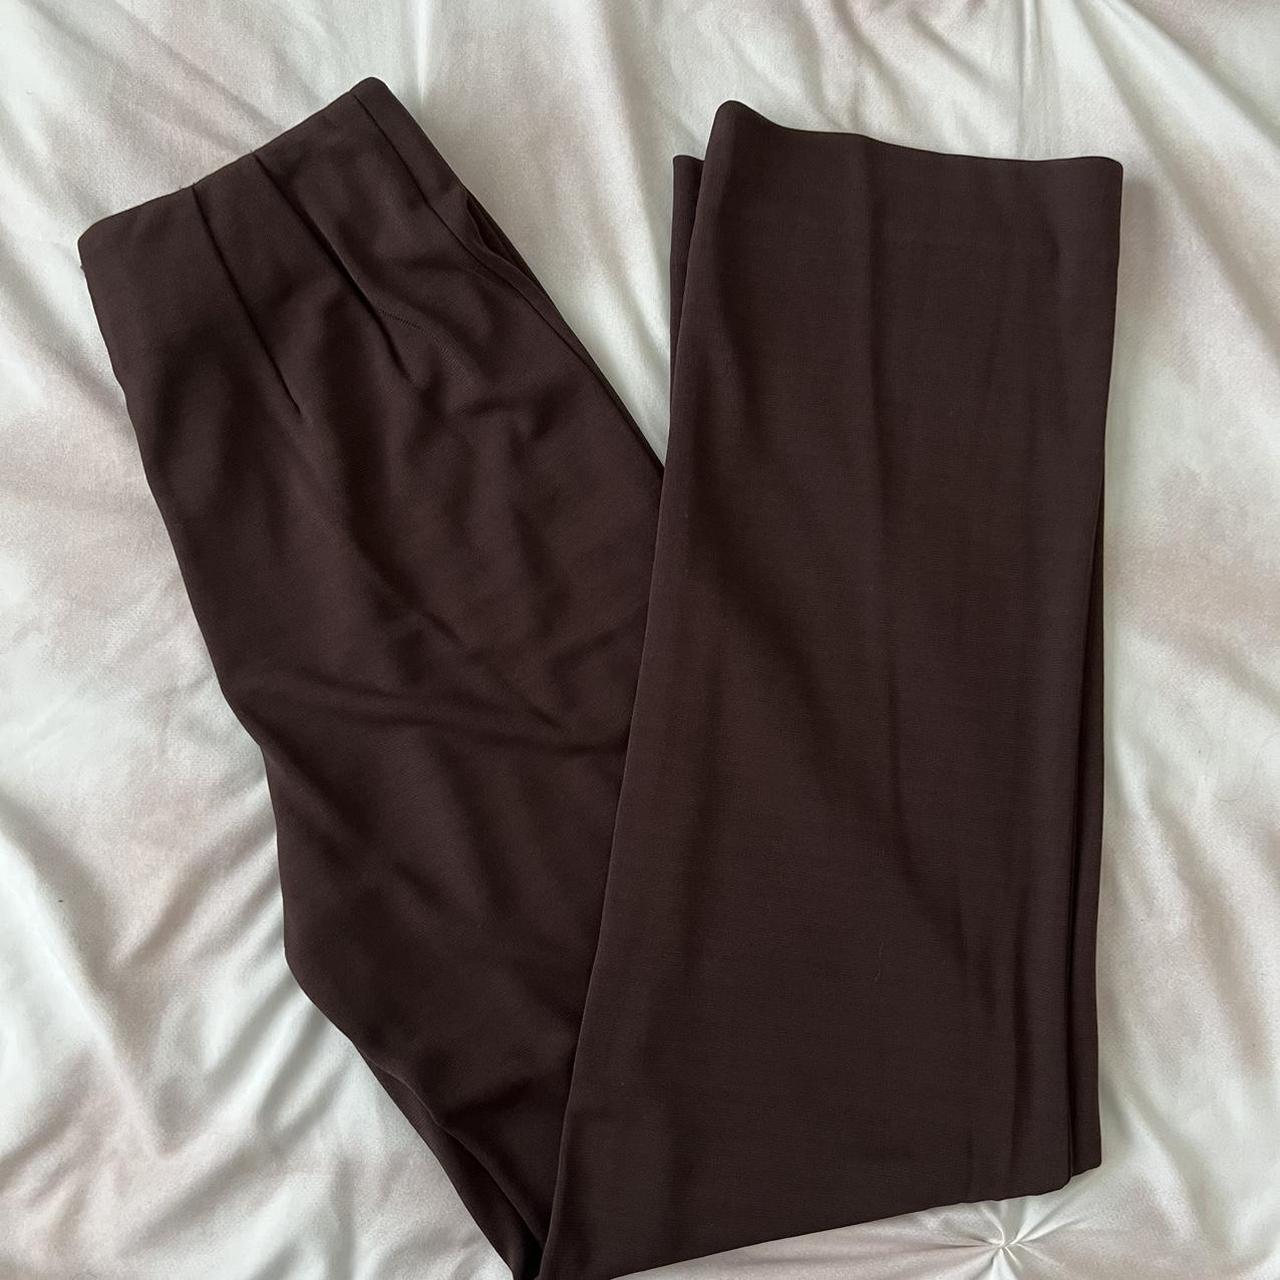 Anne Klein Women's Brown Trousers (2)